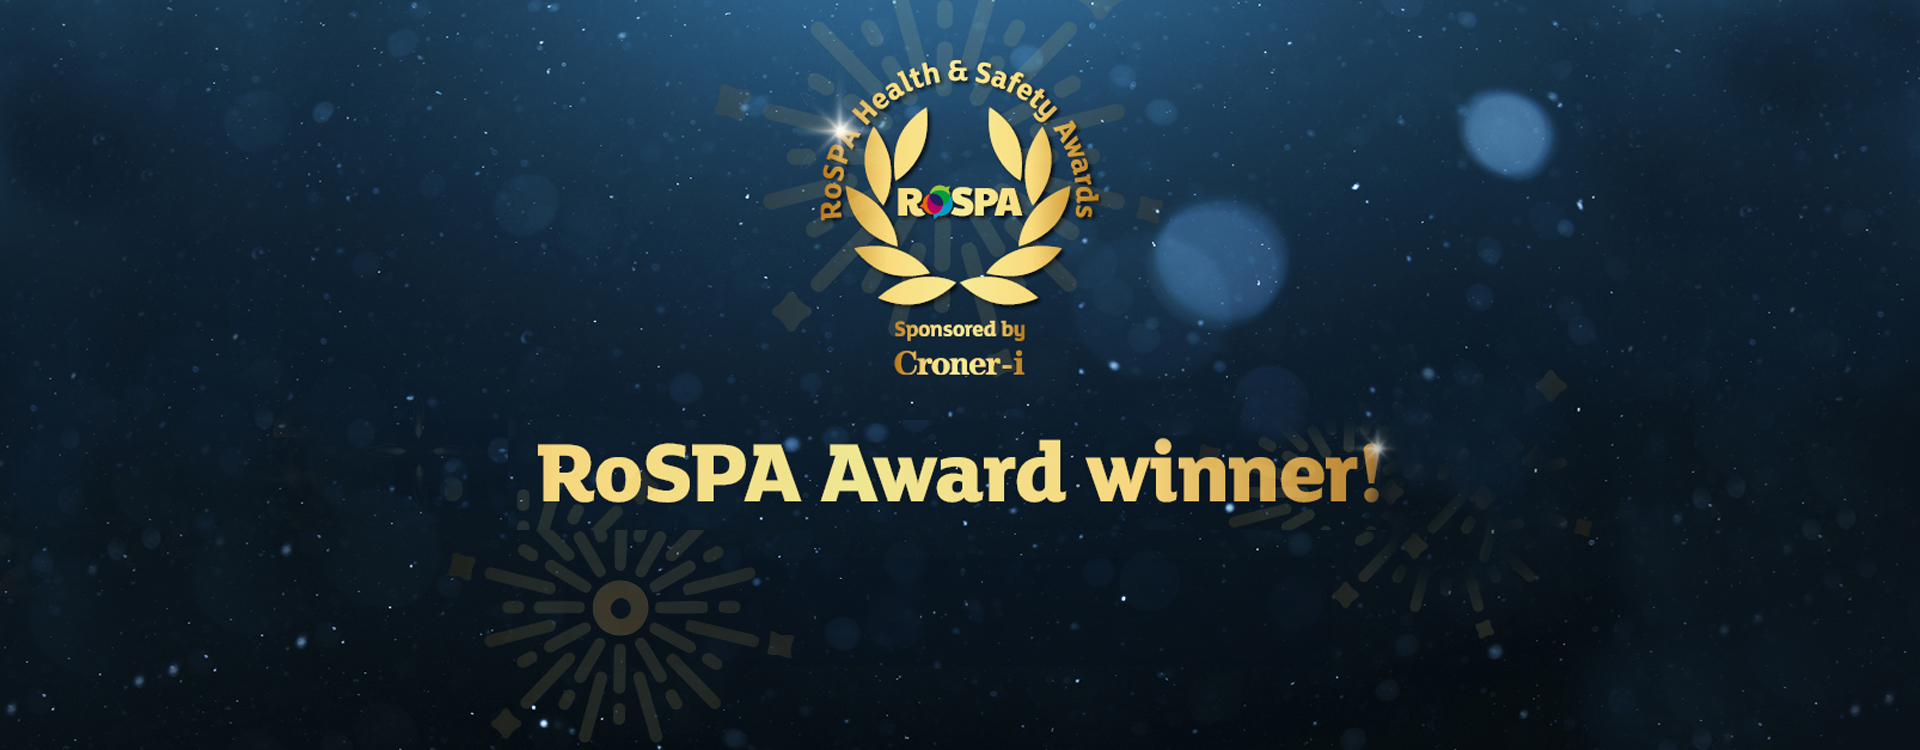 website banner -rospa award